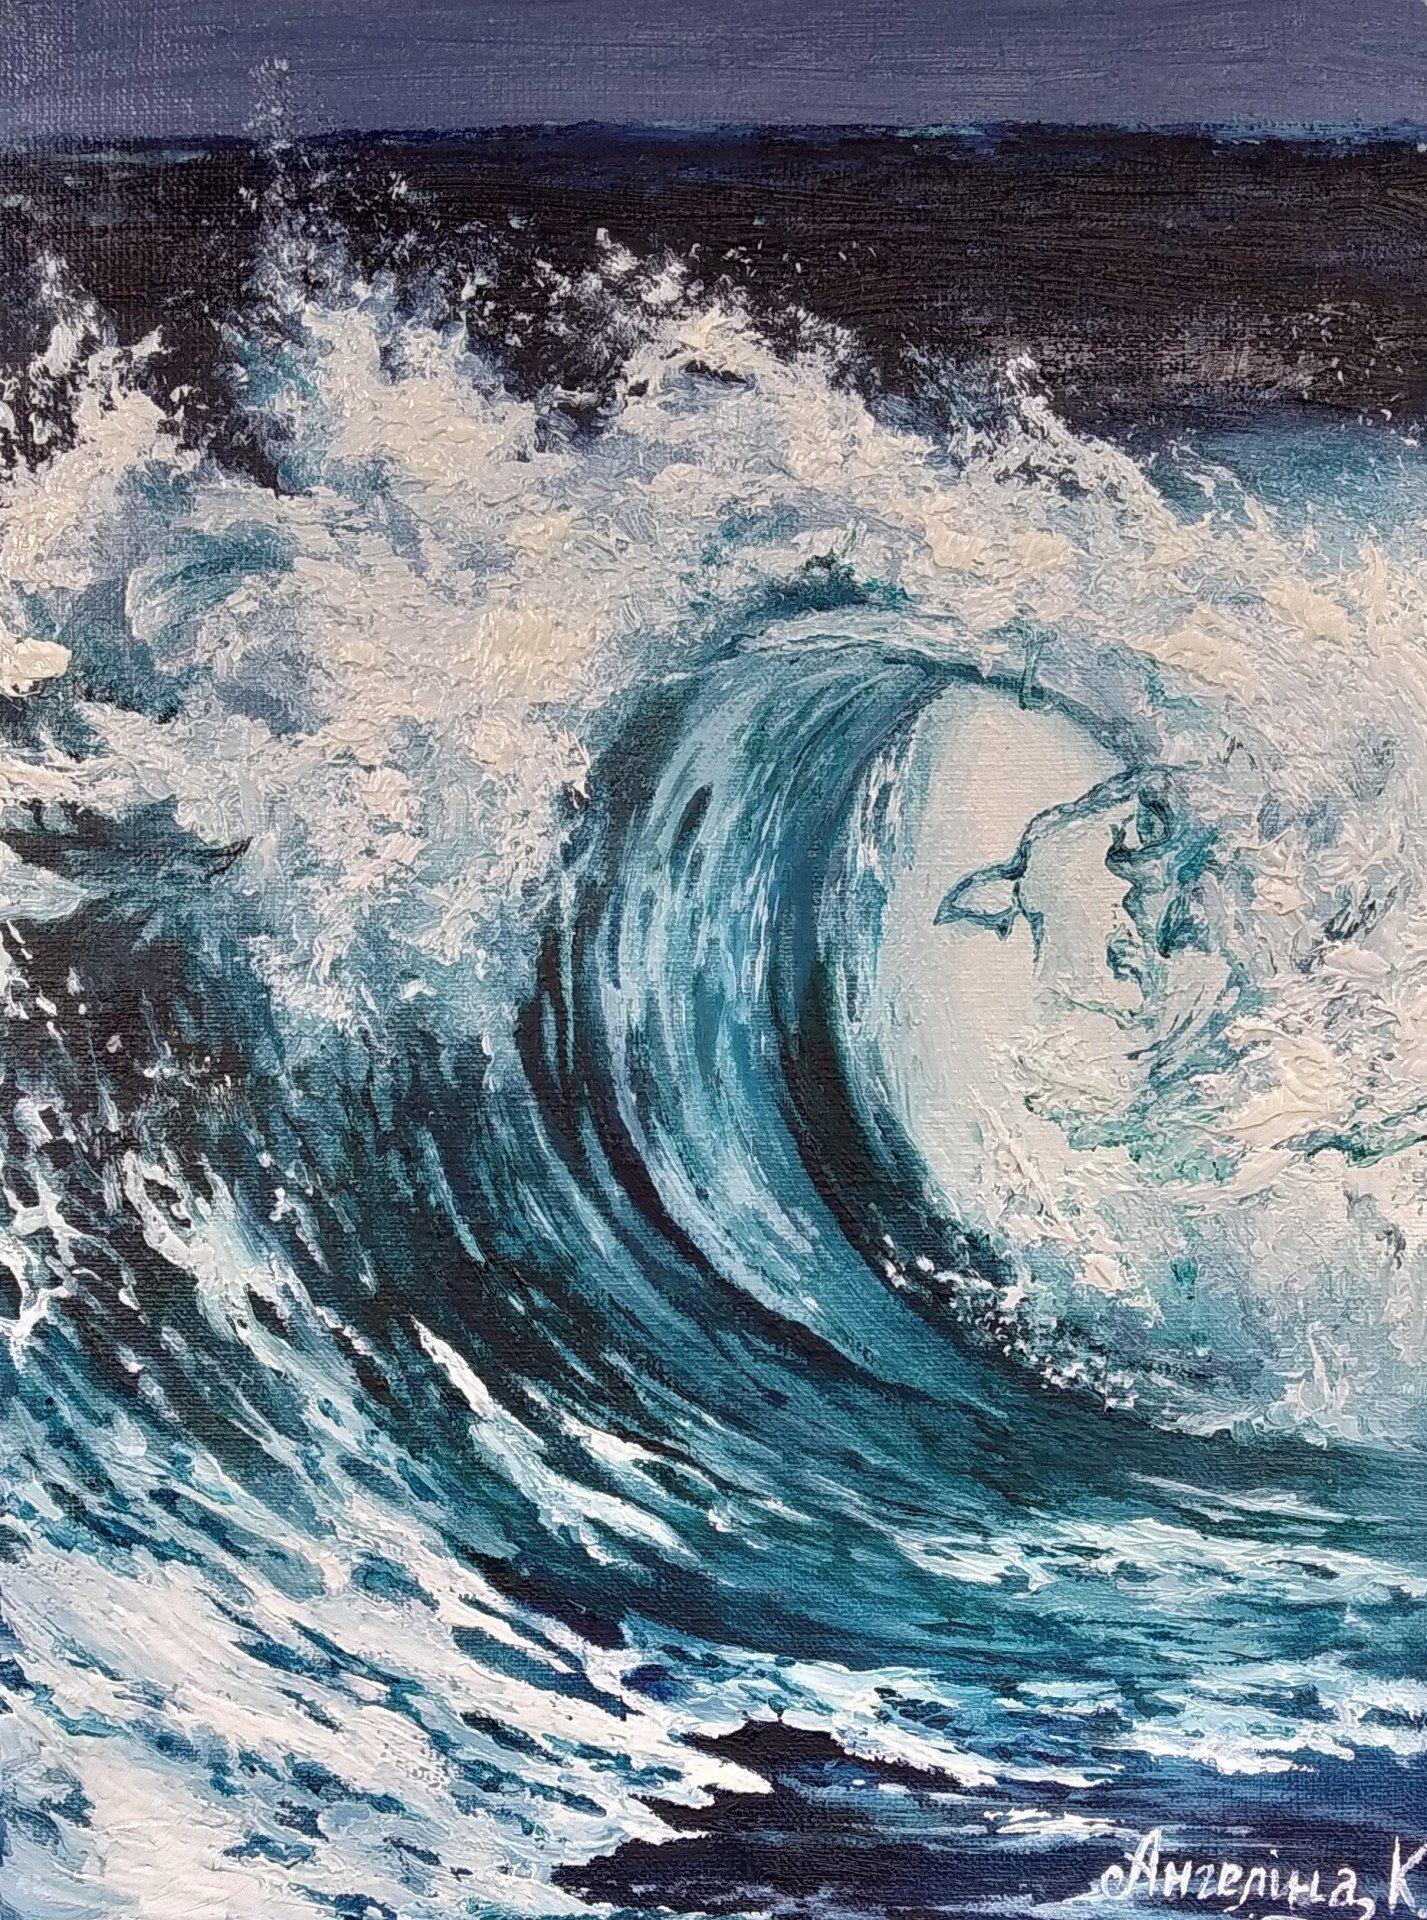 Художник шторм. Картина "шторм". Море волны картина. Ураган картина. Море волны рисунок.